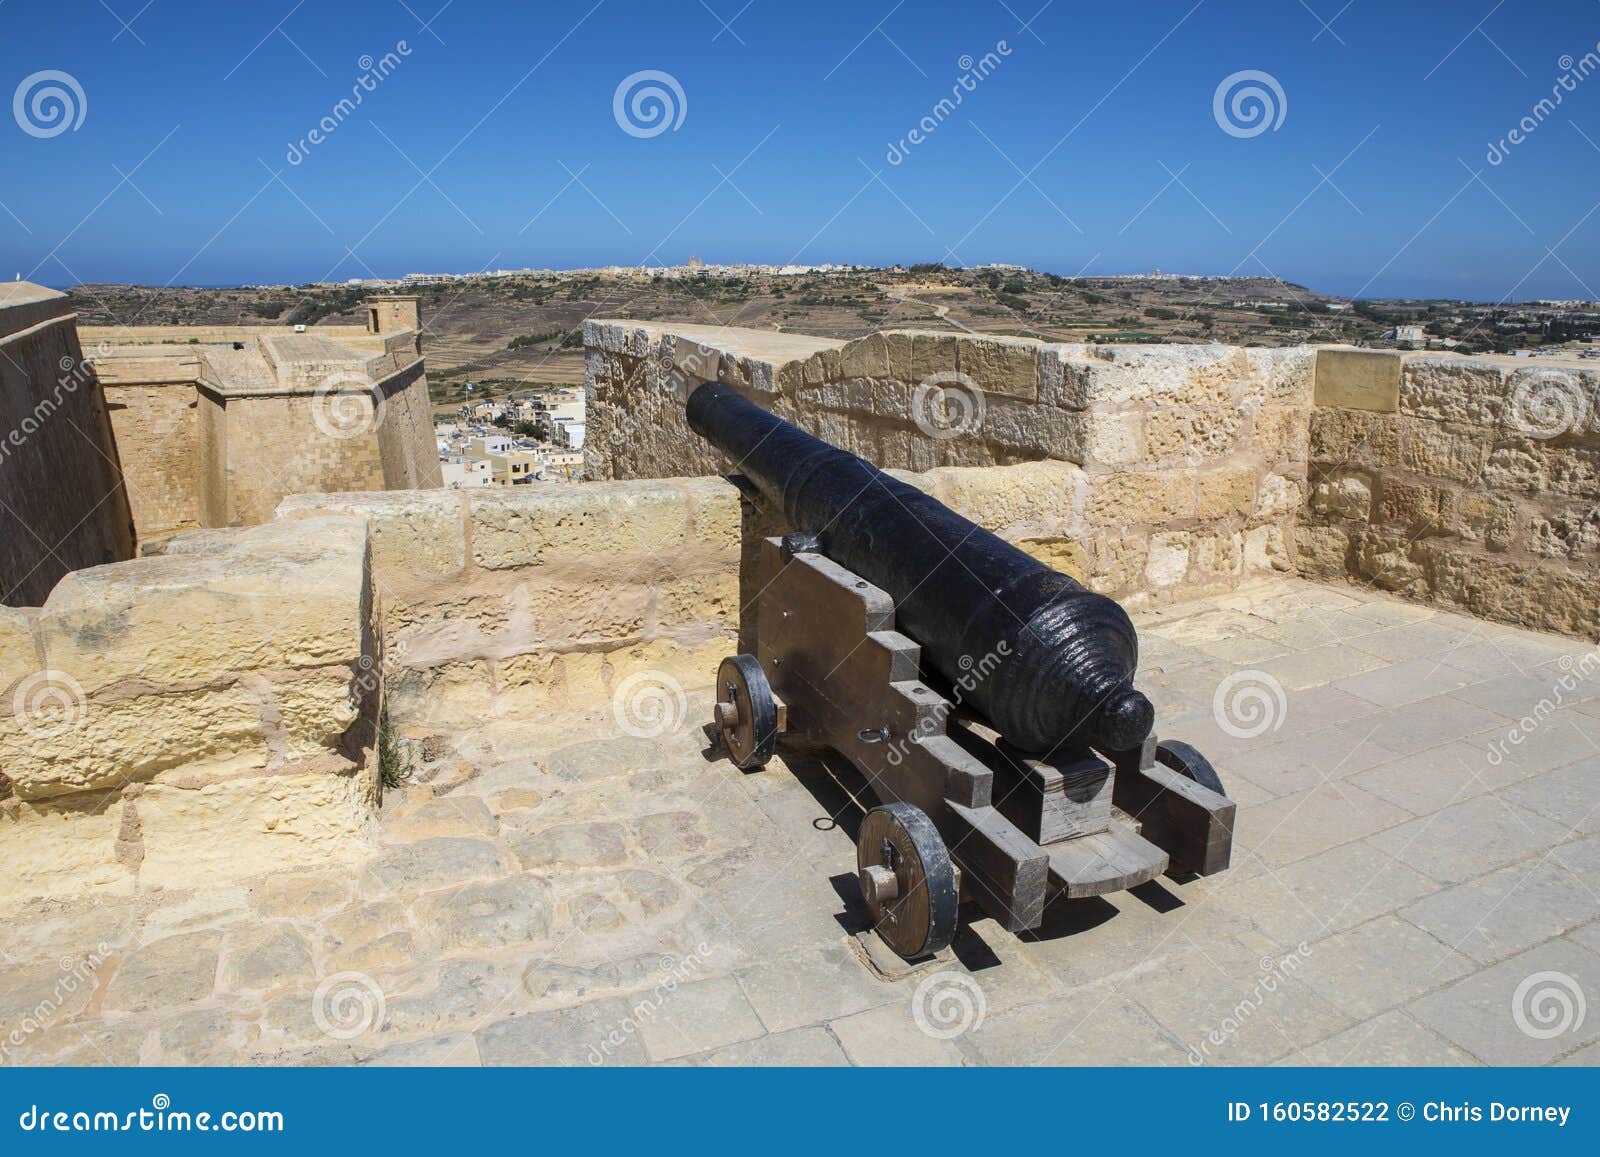 cittadella on the island of gozo